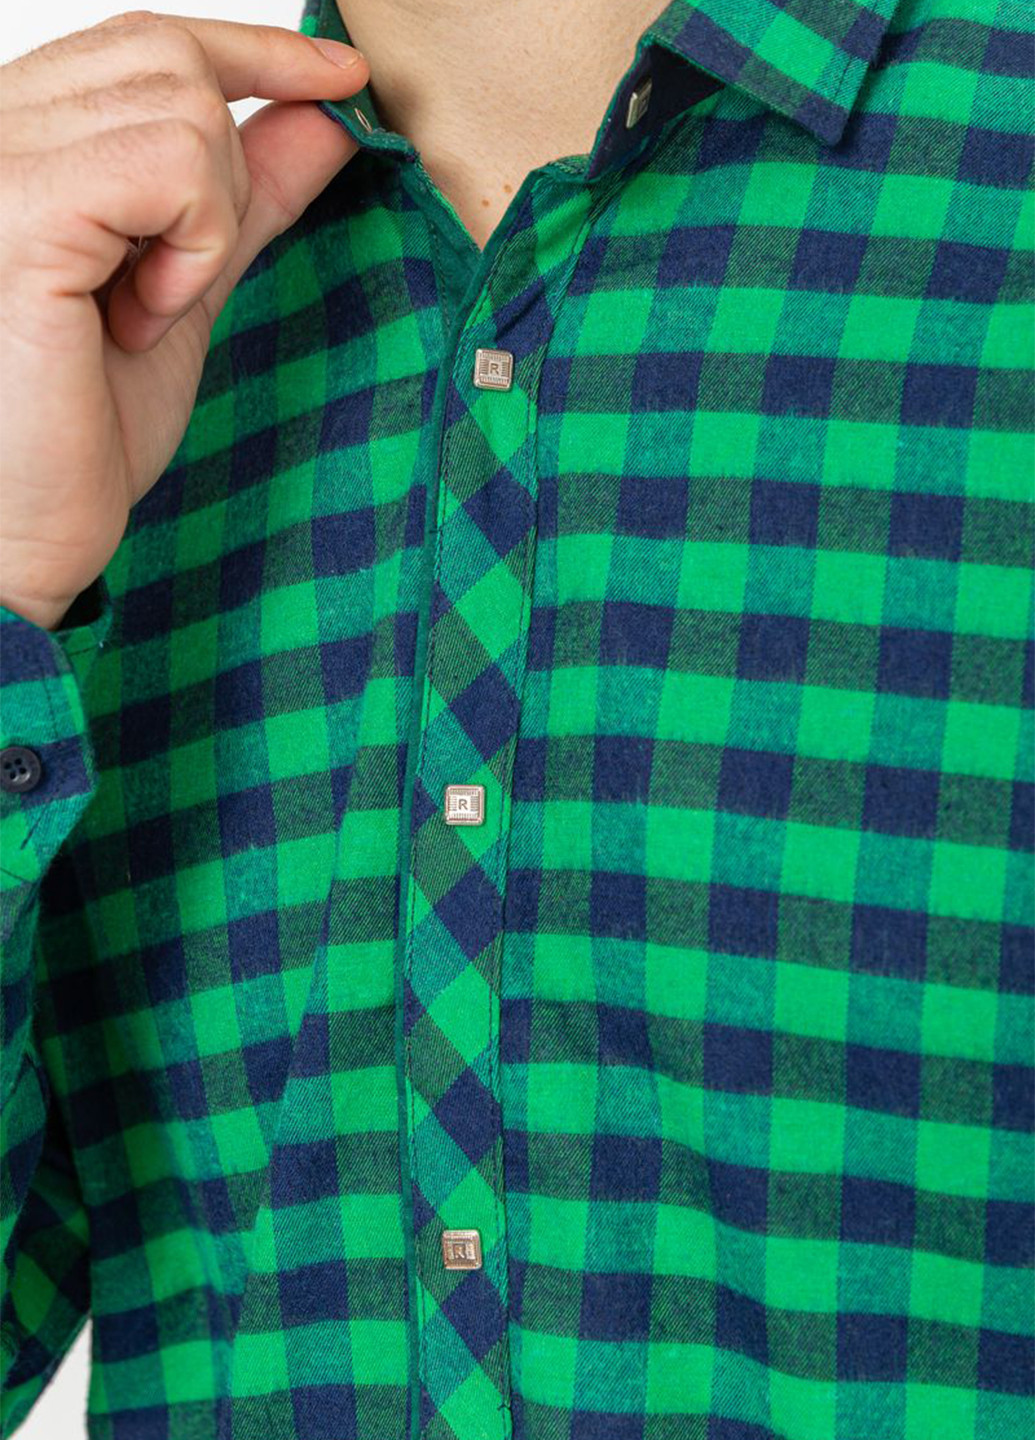 Зеленая кэжуал рубашка в клетку Ager